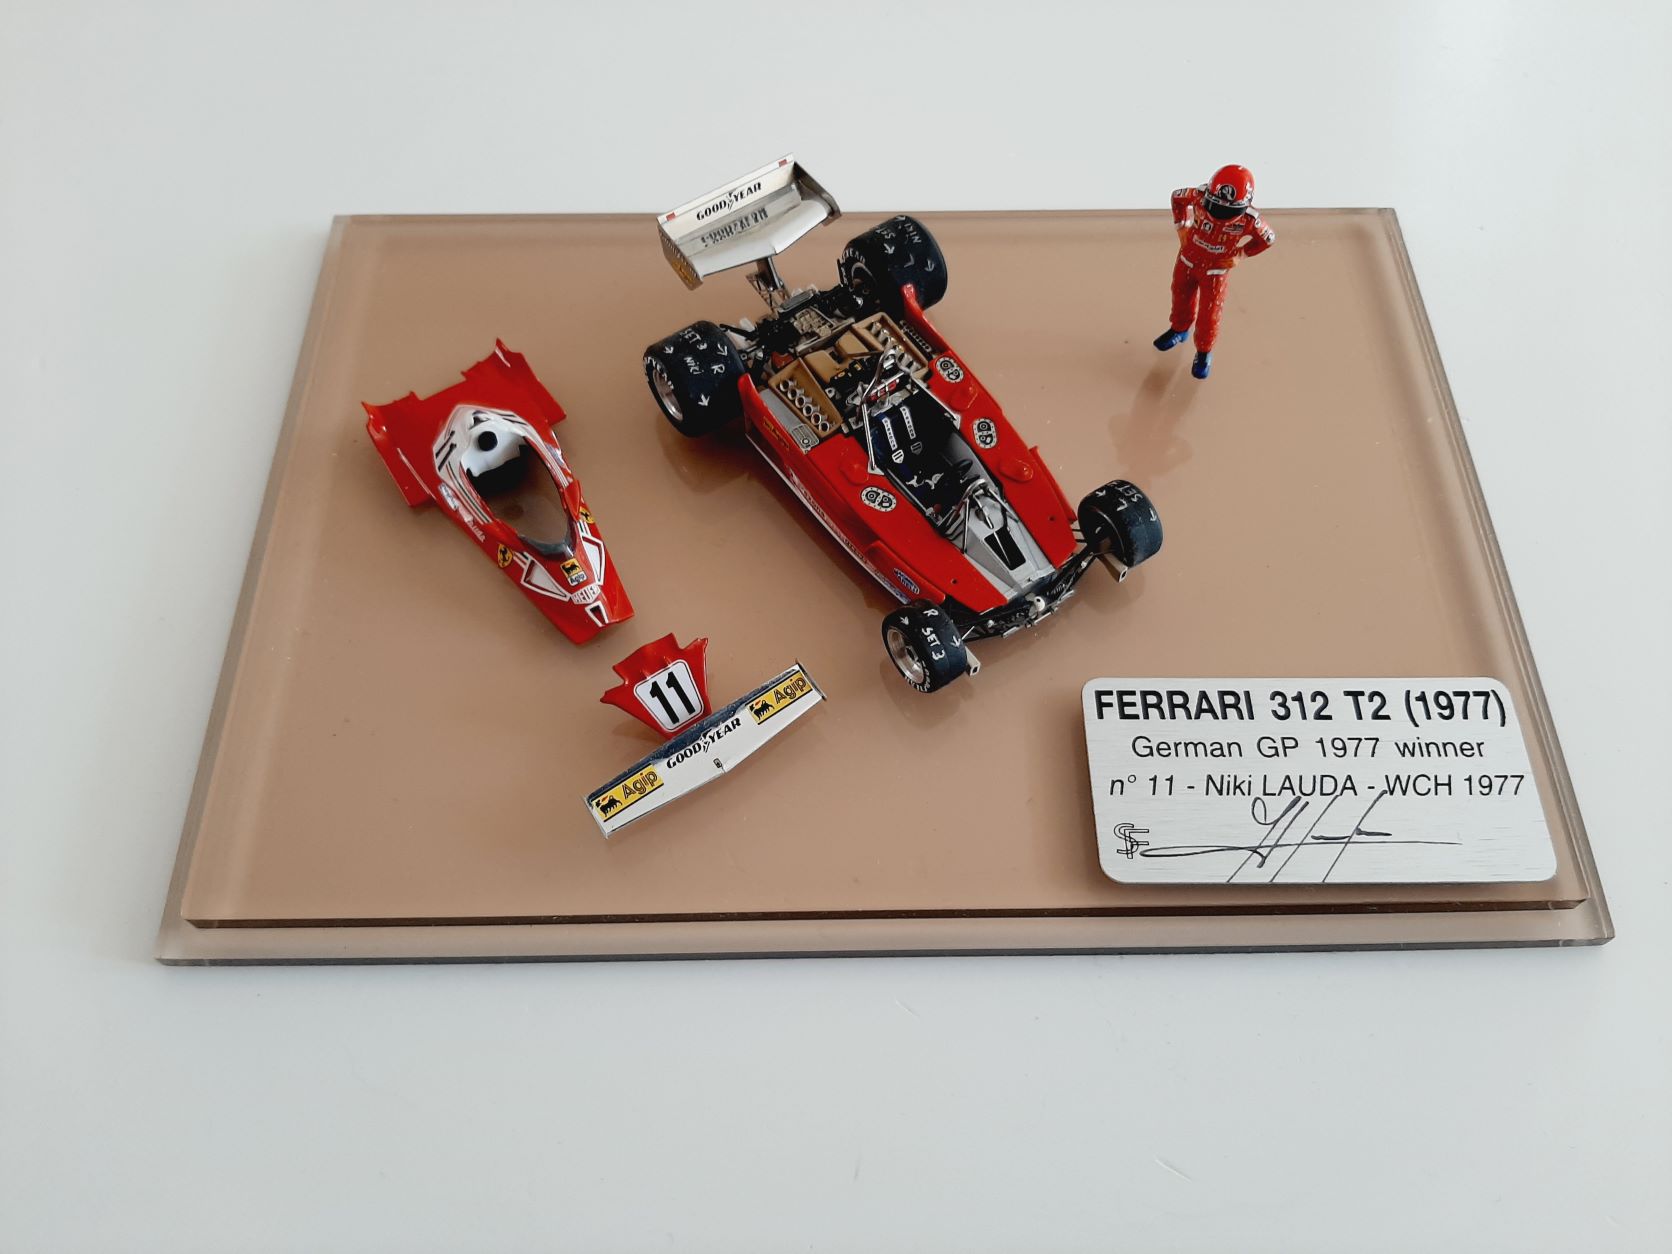 F. Suber : Ferrari 312 T2 winner German GP 1977 --> SOLD